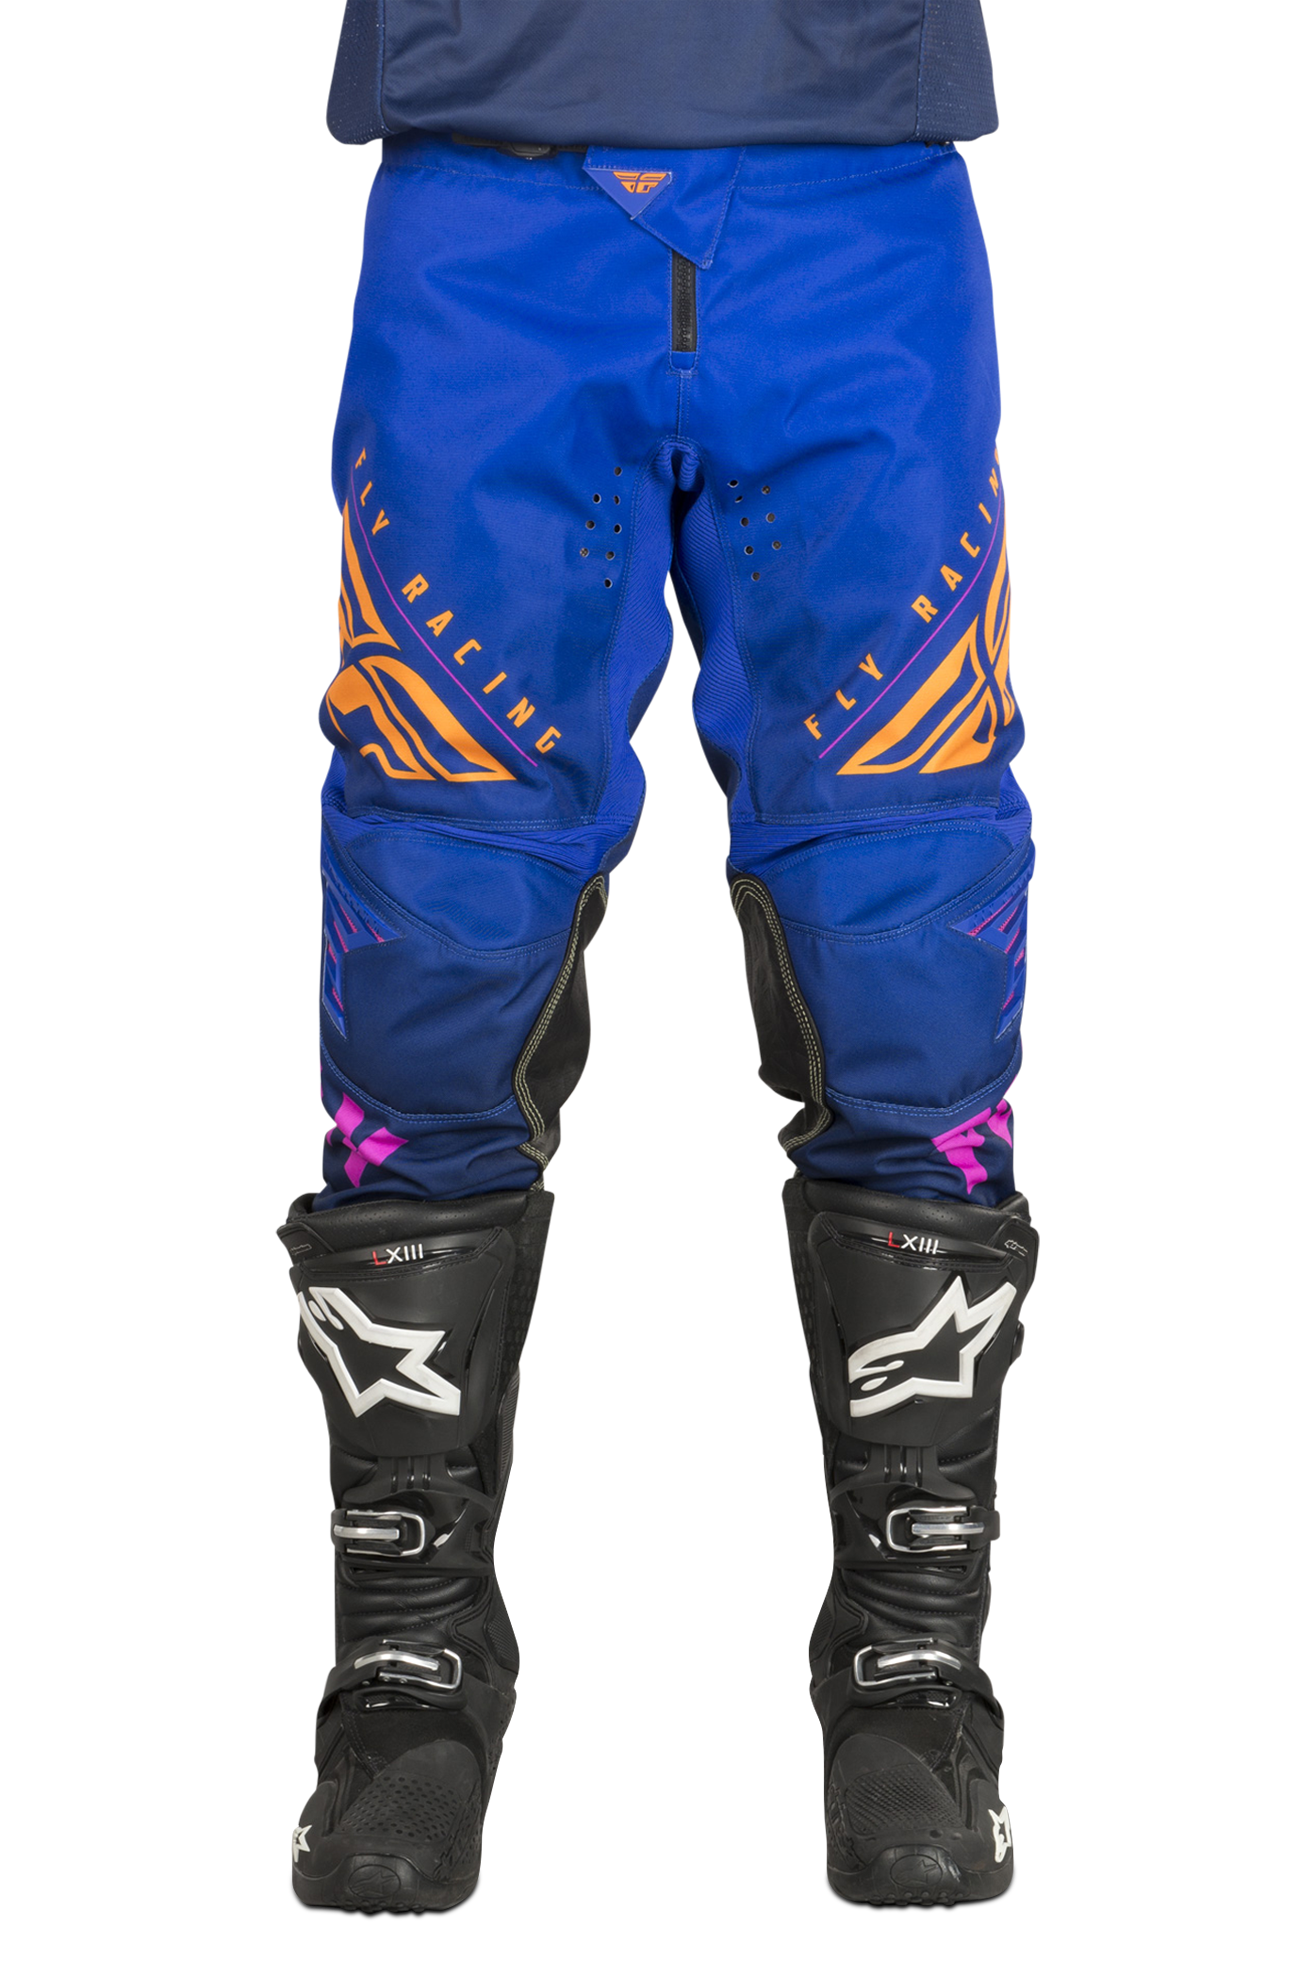 Fly Racing Kinetic K220 MX-broek Midnight Blauw-Oranje  - Blauw